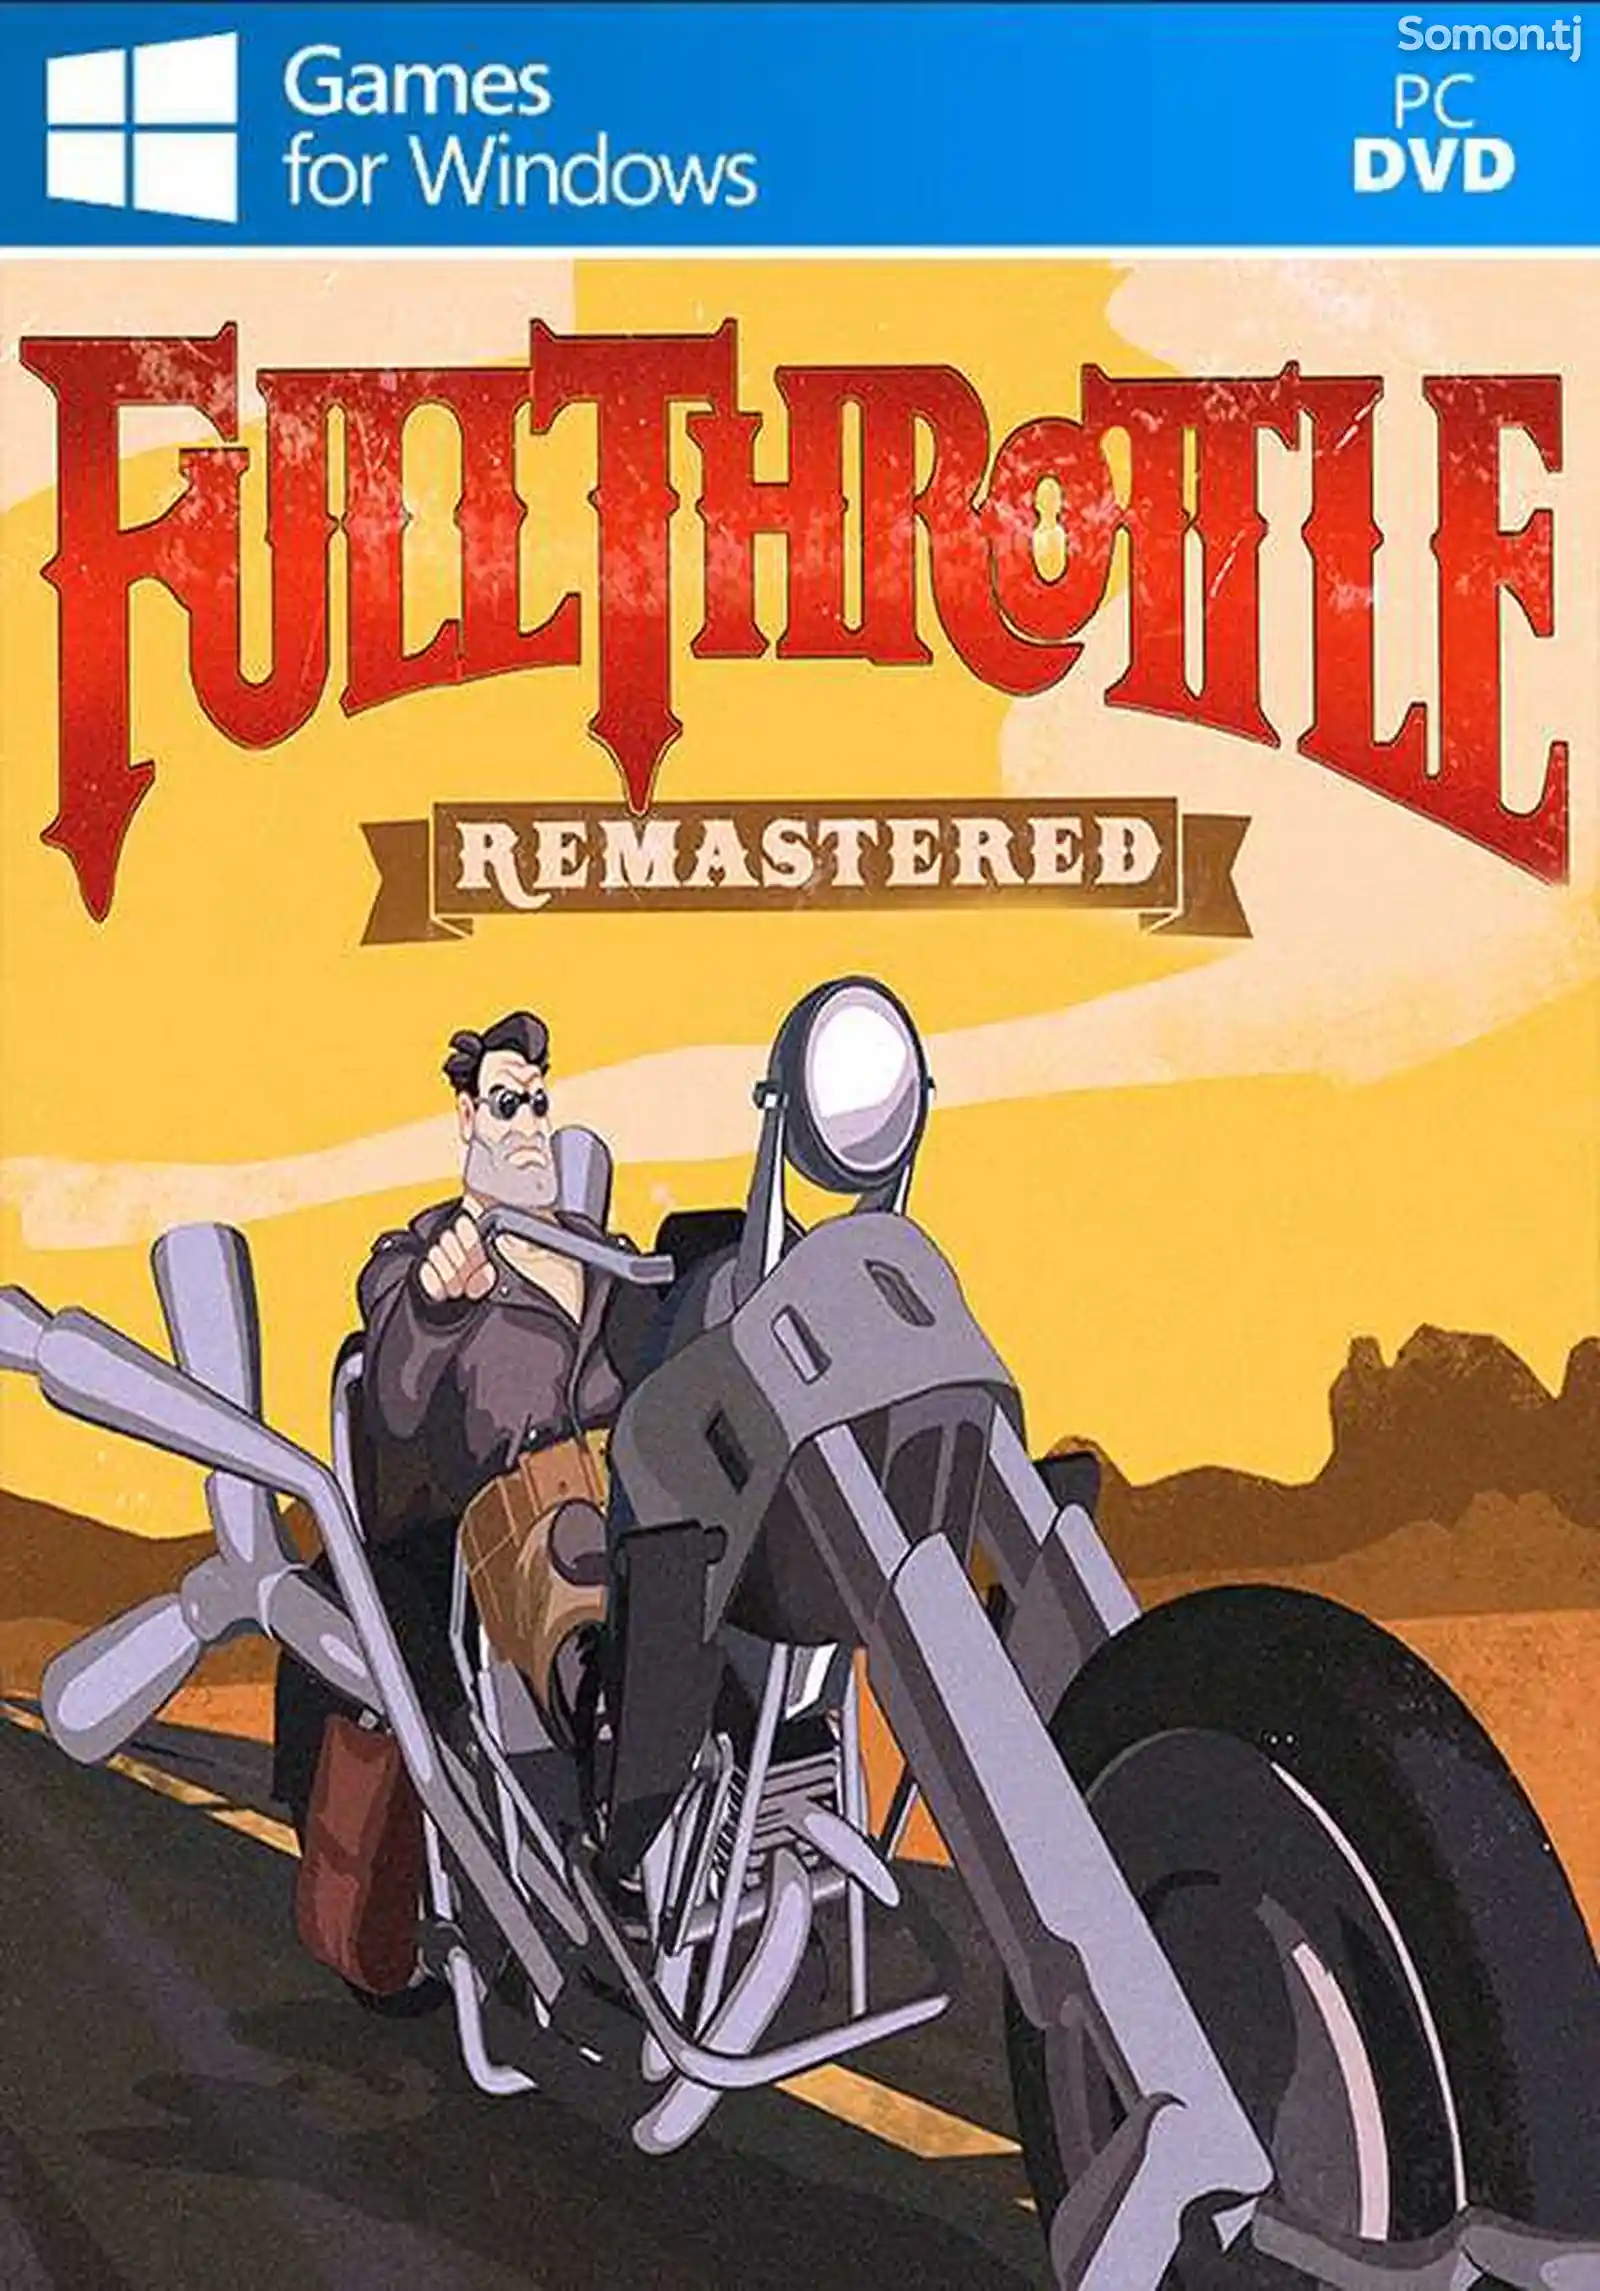 Игра Full throttle remastered для компьютера-пк-pc-1